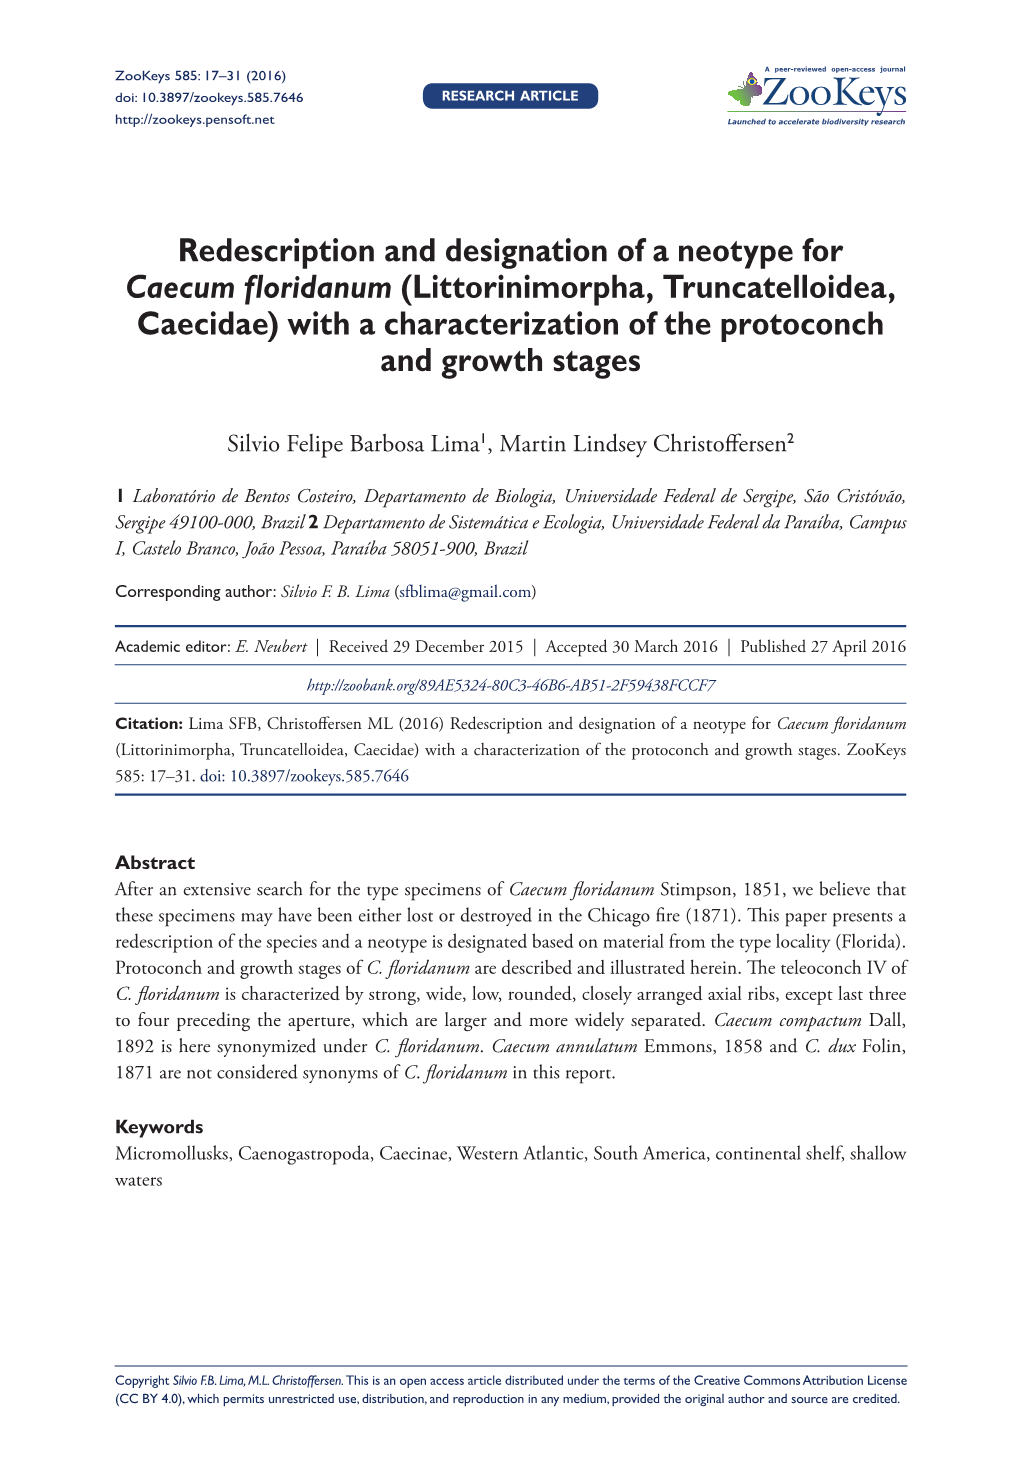 ﻿Redescription and Designation of a Neotype for Caecum Floridanum